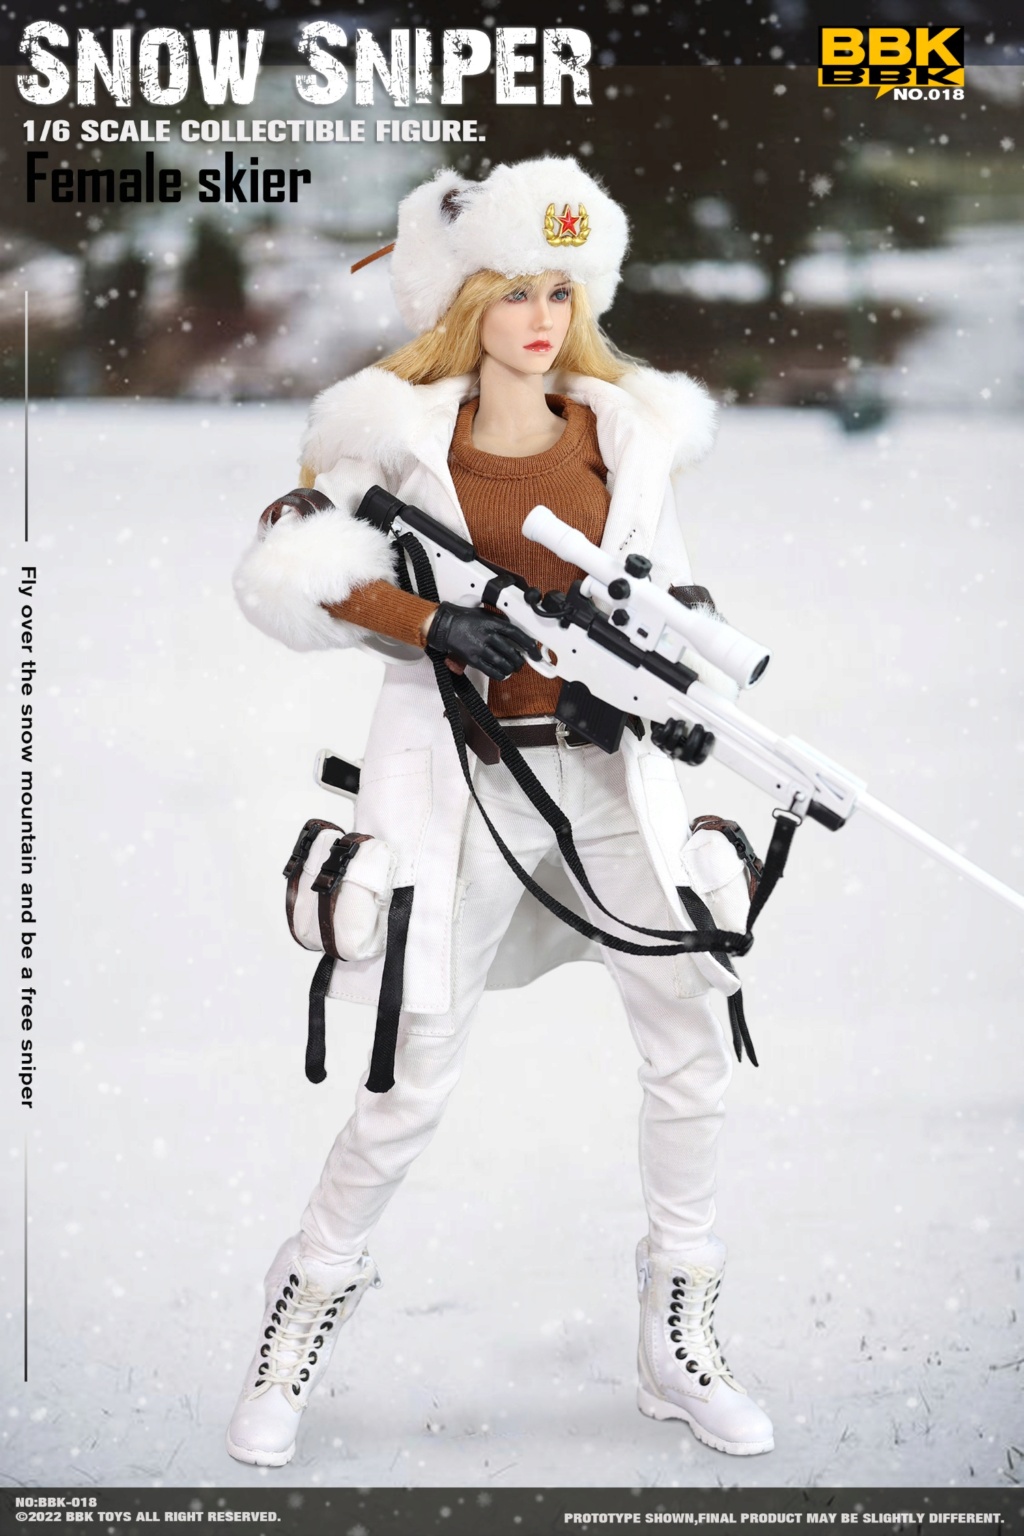 skier - NEW PRODUCT: BBK: BBK018 1/6 Scale Snow Sniper (Female Skier) 4698bf10